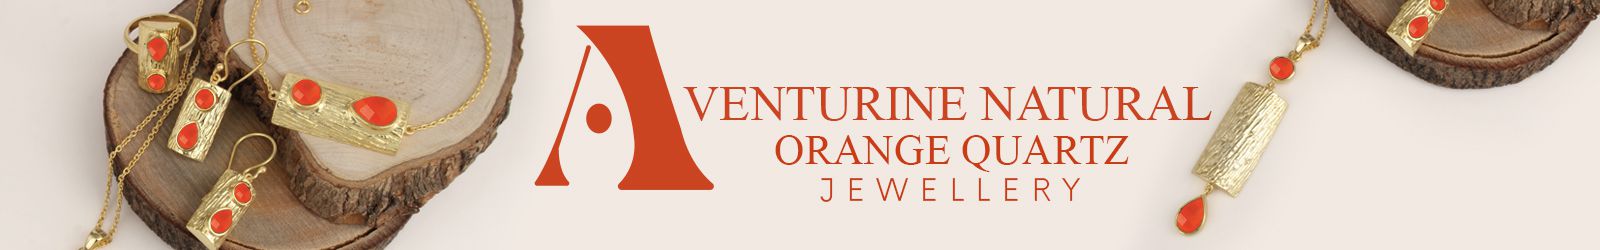 Silver Aventurine Natural Orange Quartz Jewelry Wholesale Supplier